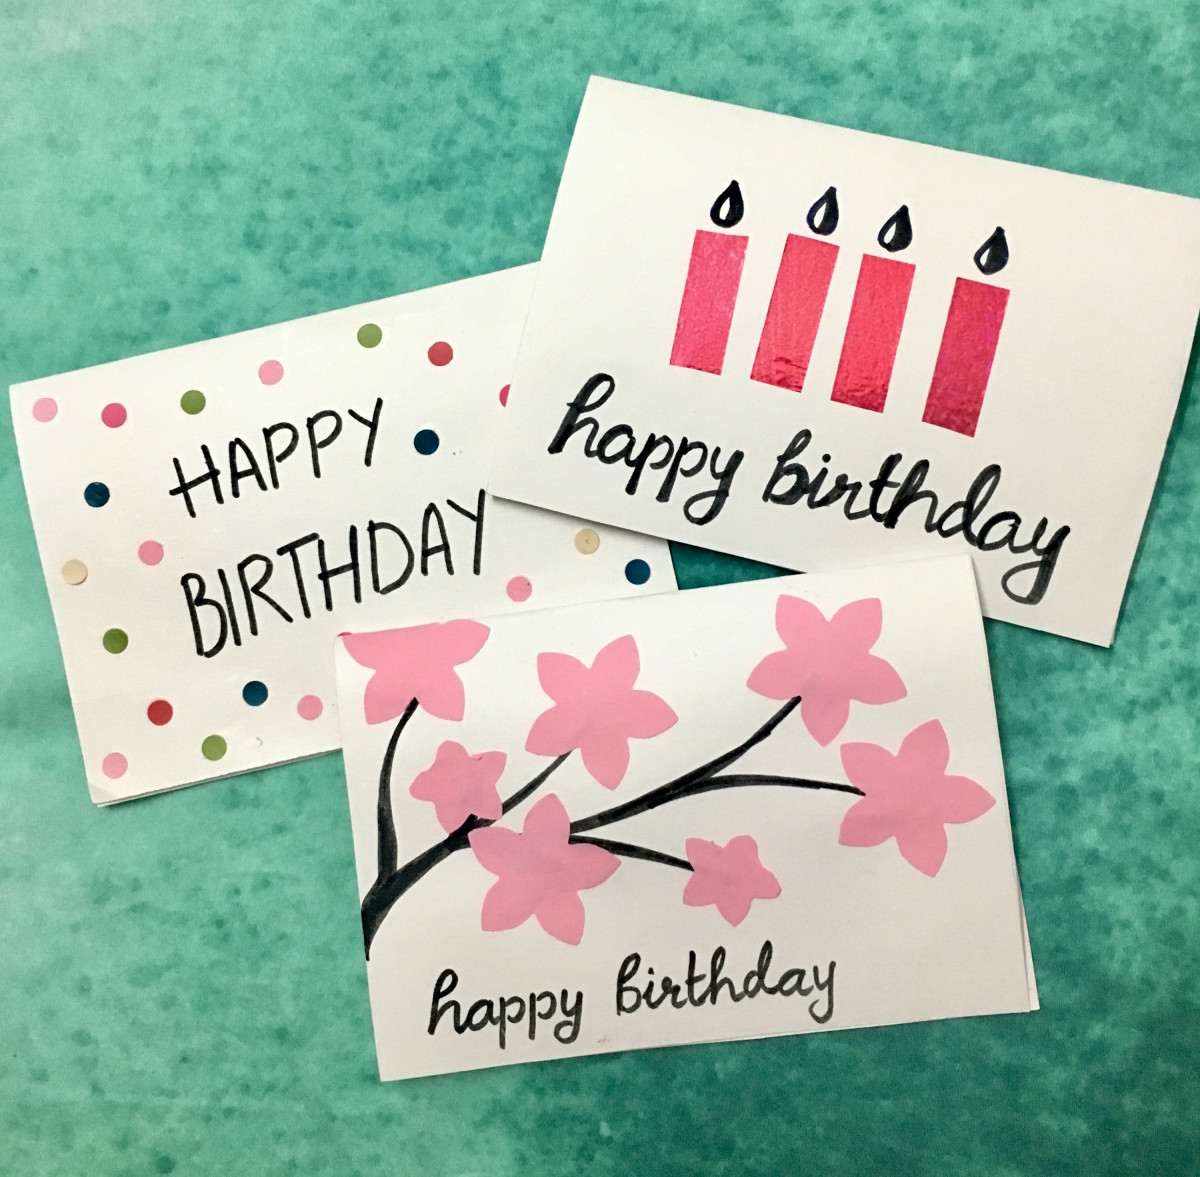 3 easy 5 minute diy birthday greeting cards holidappy